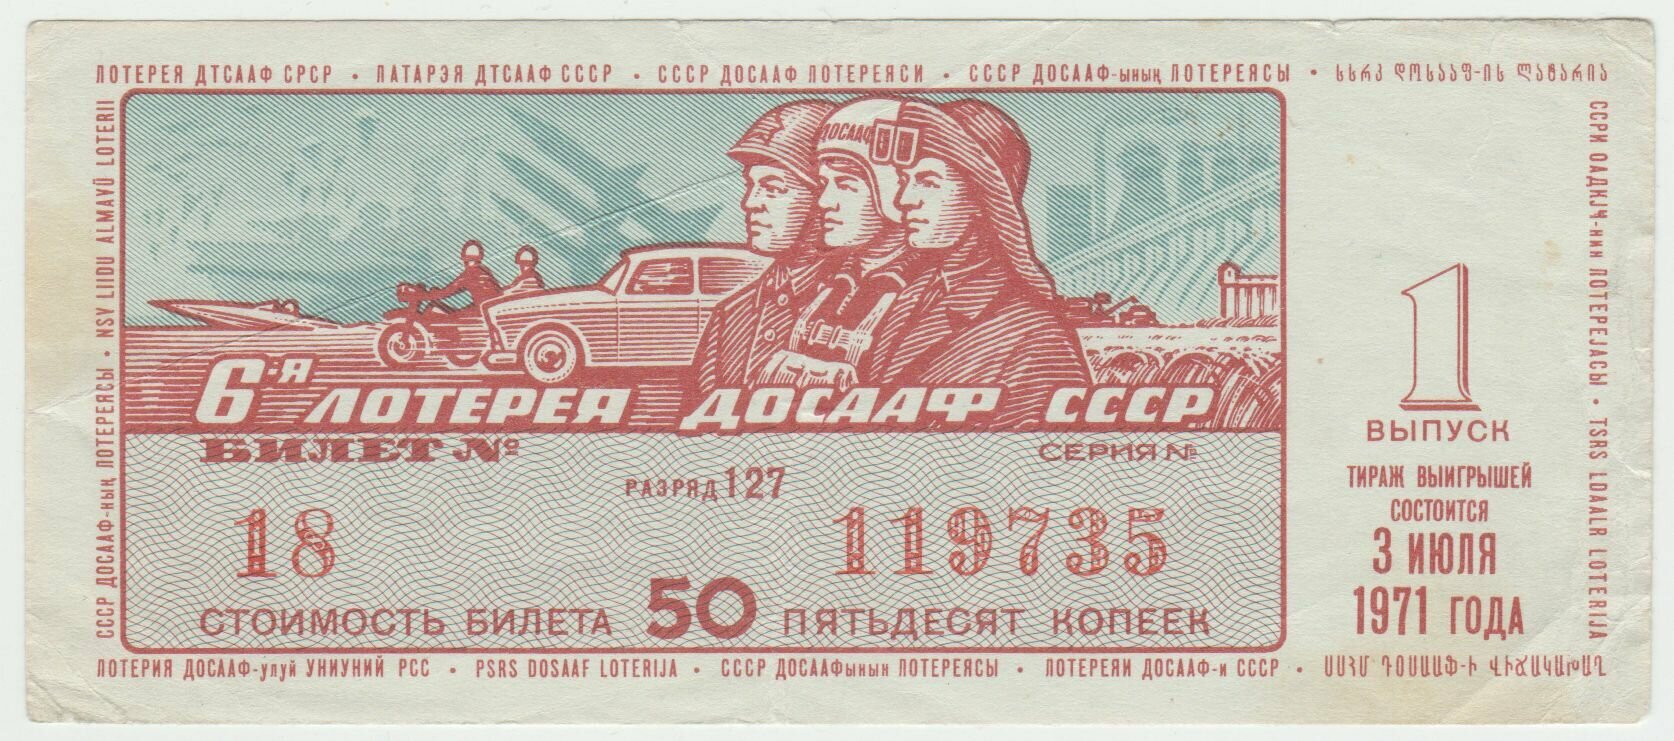 Билет 6 лотерея досааф СССР 50 копеек 1971 года.